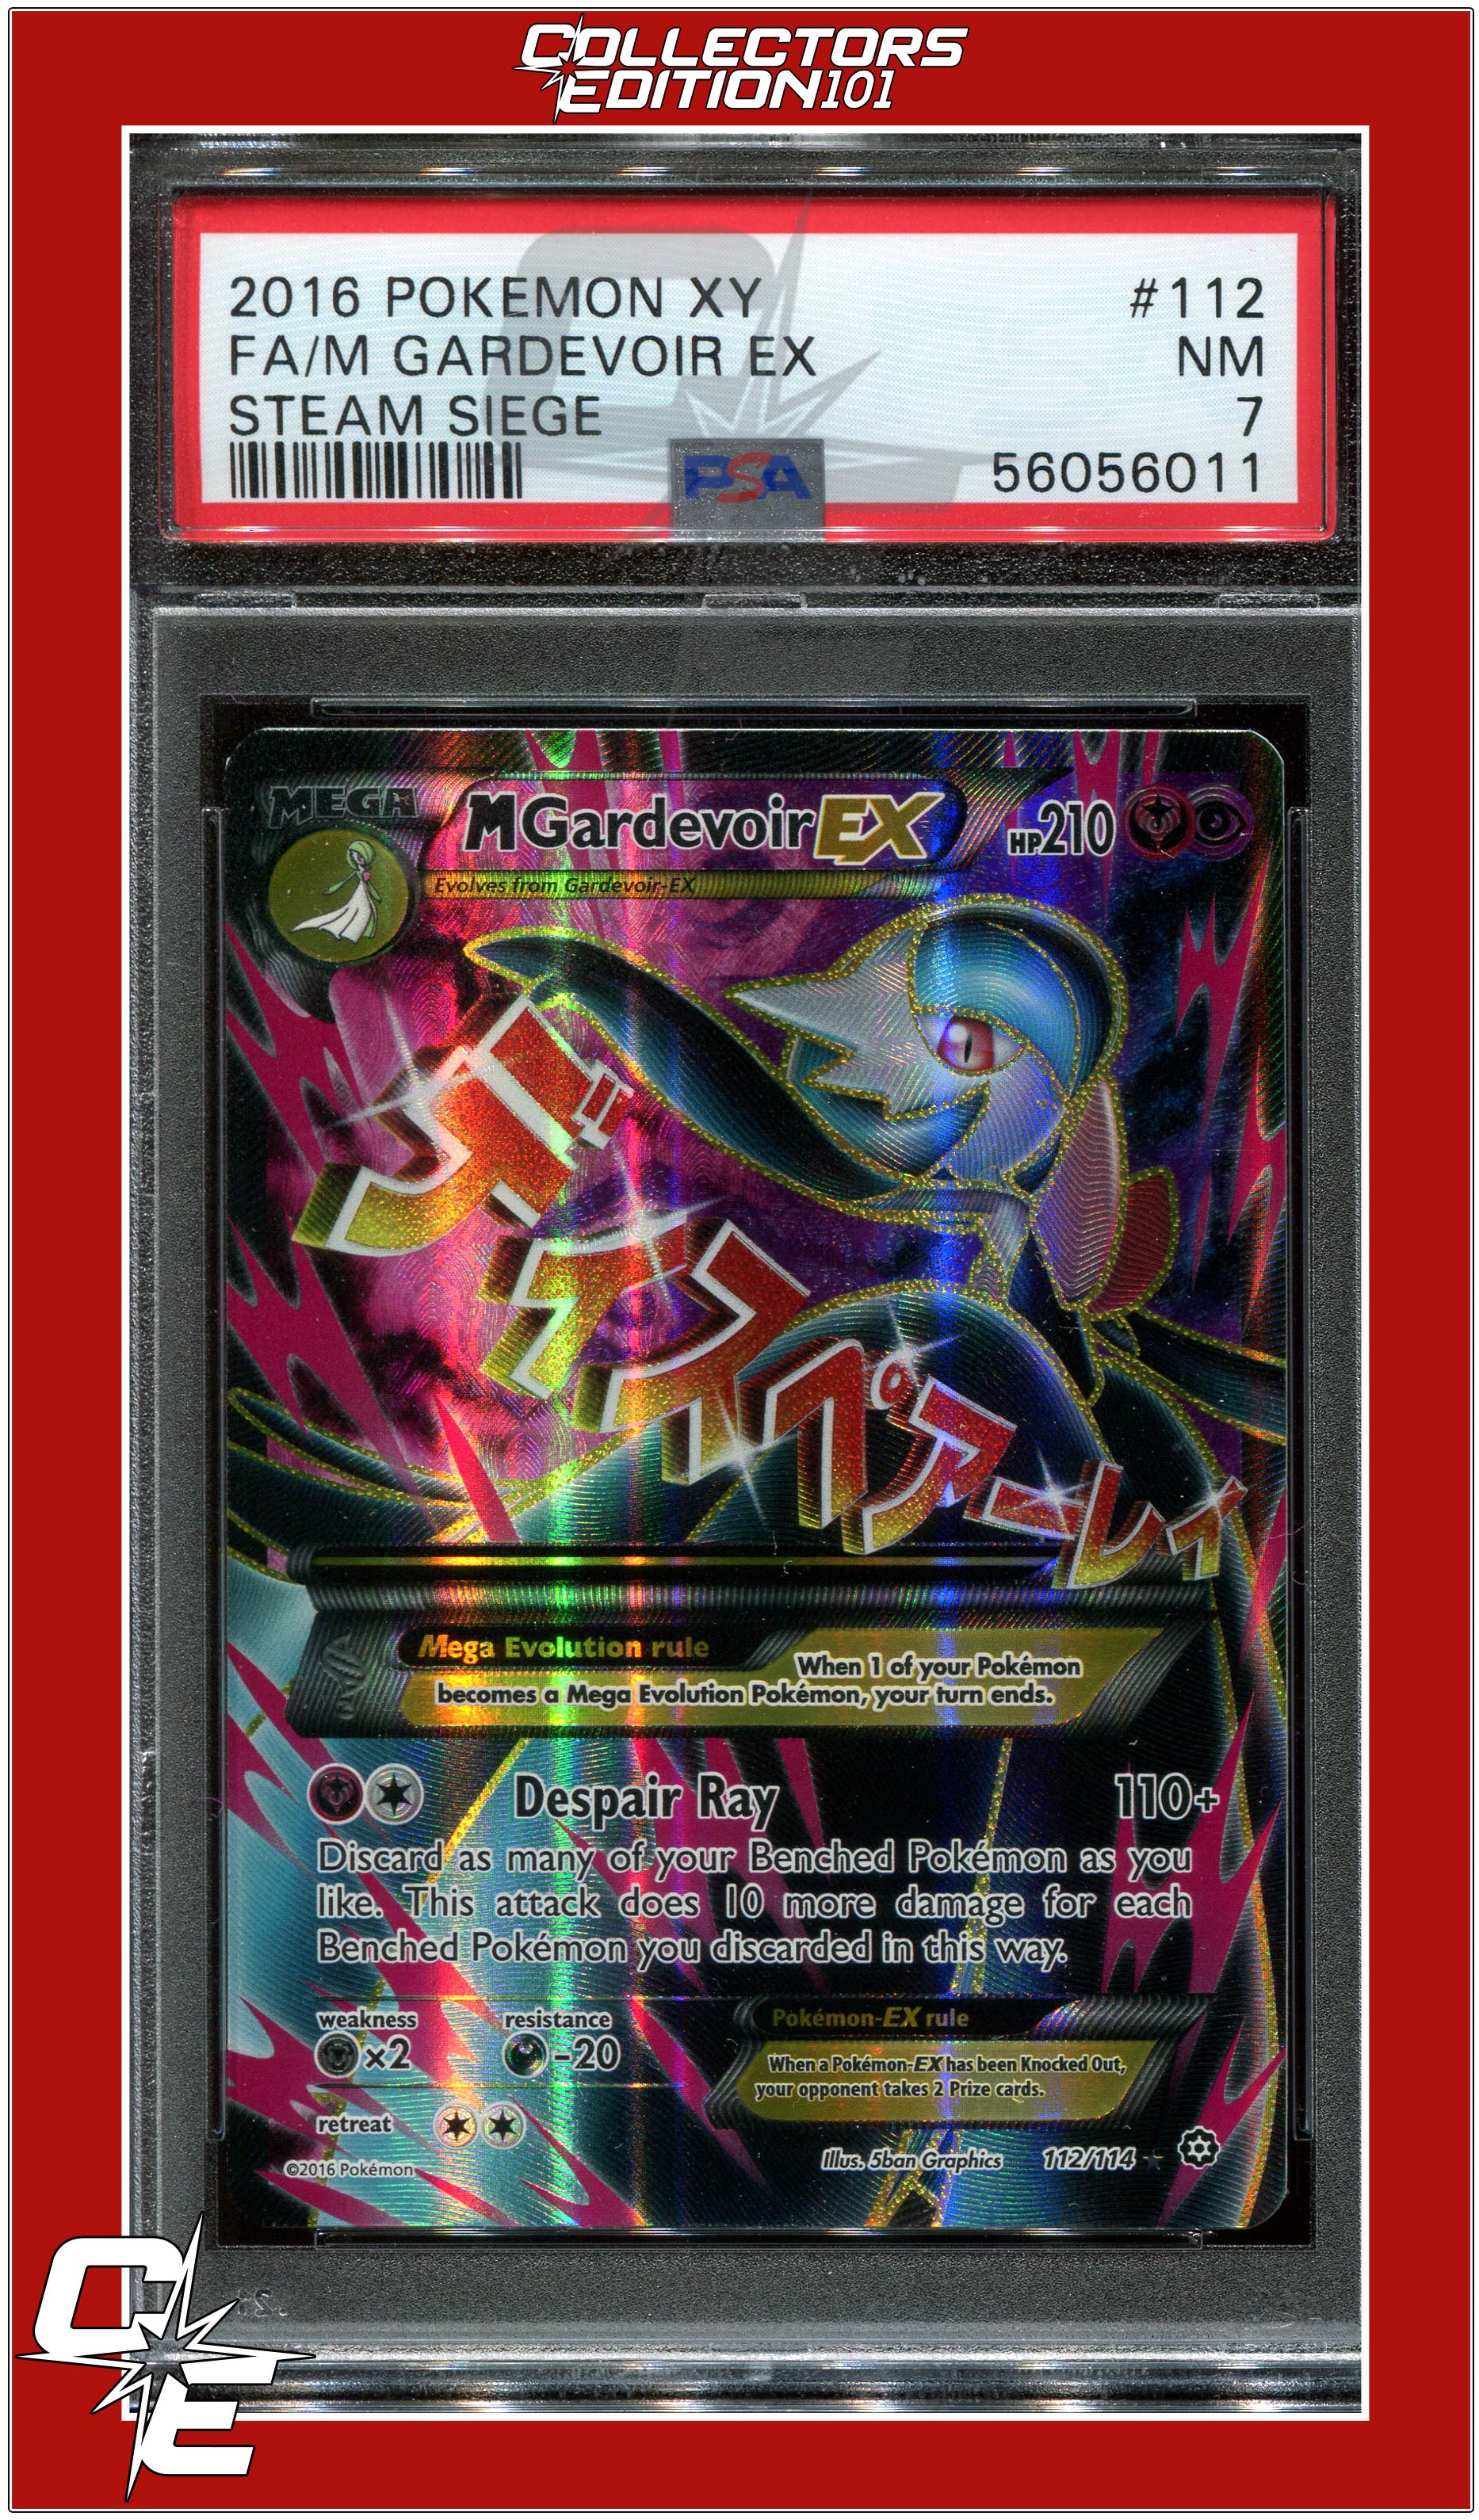 2016 MEGA GARDEVOIR EX 112/114 XY Steam Siege Pokemon Card FULL ART HOLO  NM/MINT